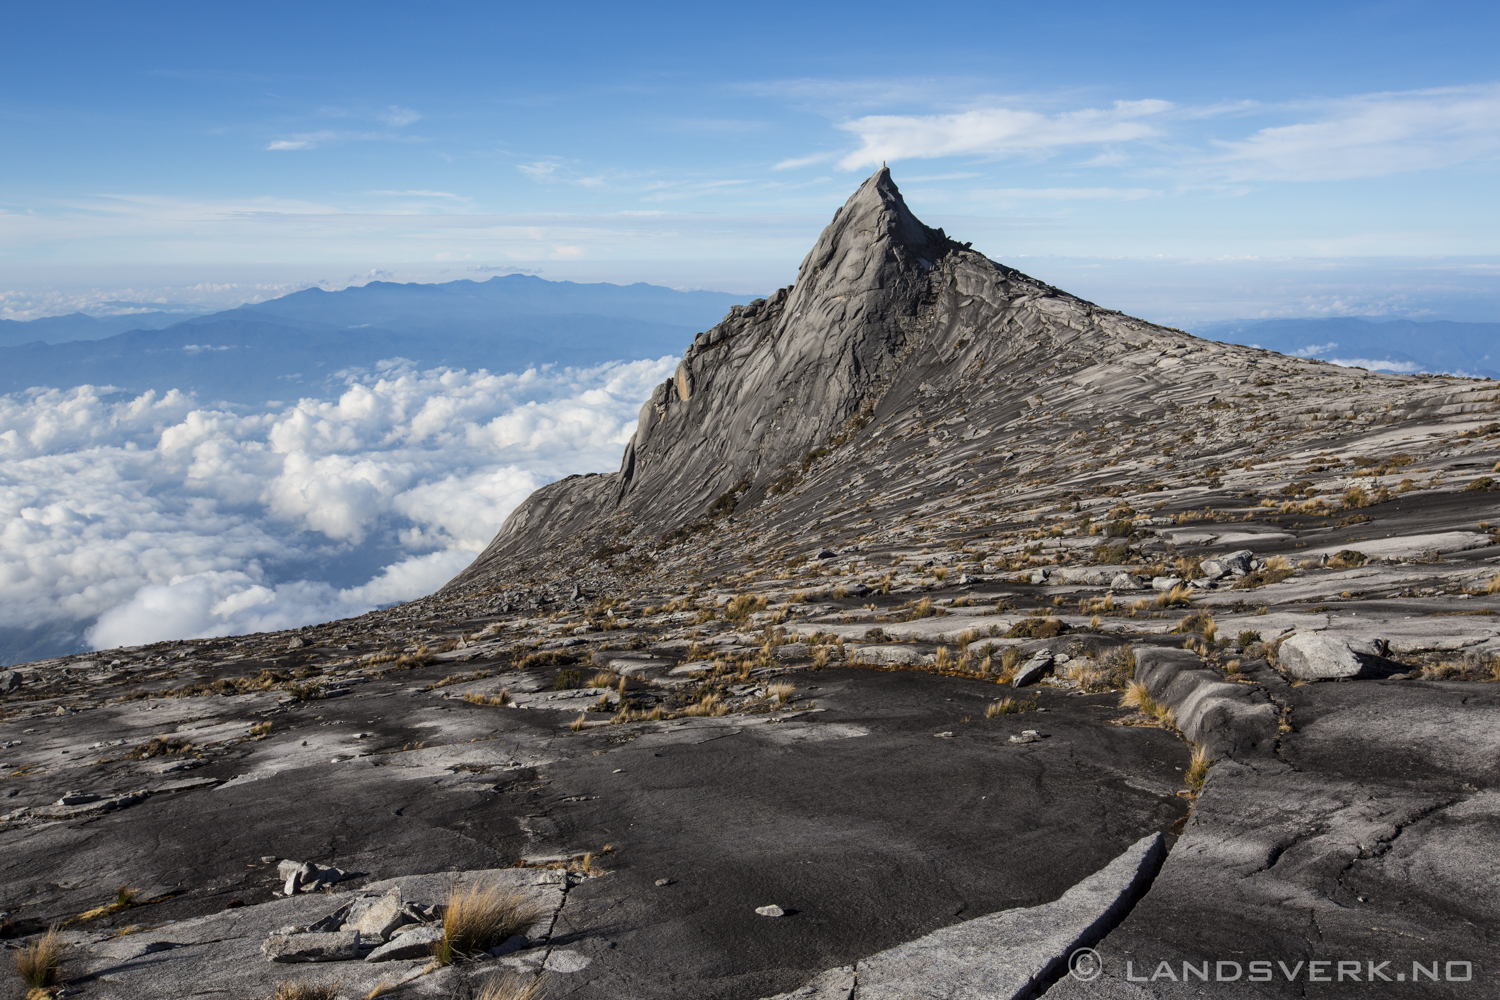 Mount Kinabalu, Borneo.

(Canon EOS 5D Mark III / Canon EF 16-35mm f/2.8 L II USM)